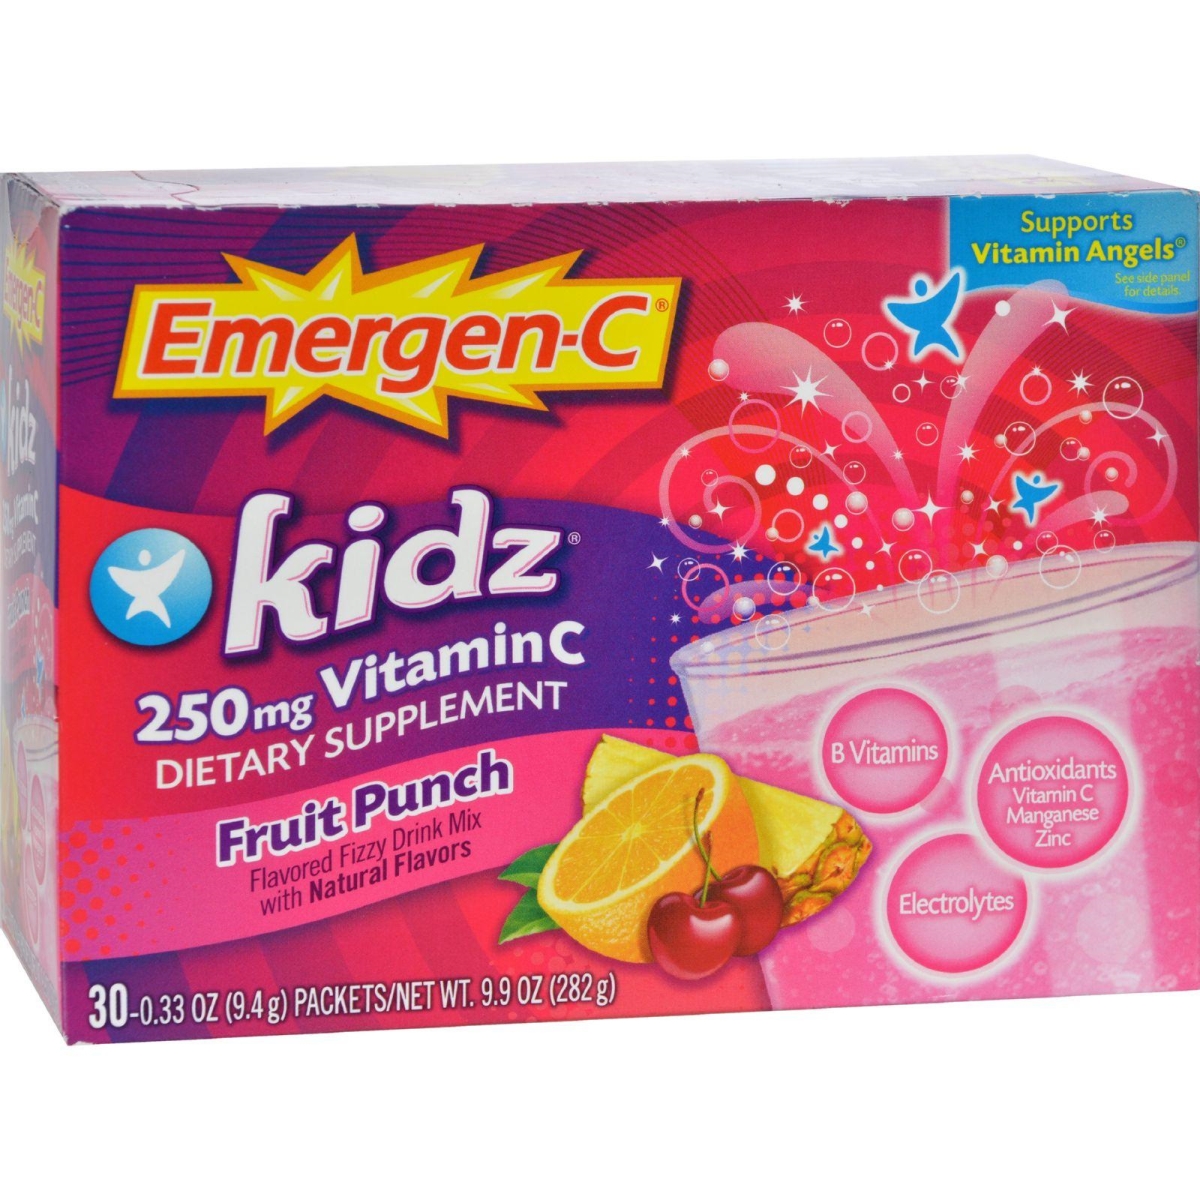 Alacer Hg0758953 250 Mg Emergen-c Kidz Vitamin C Fizzy Drink Mix - Fruit Punch, 30 Packet